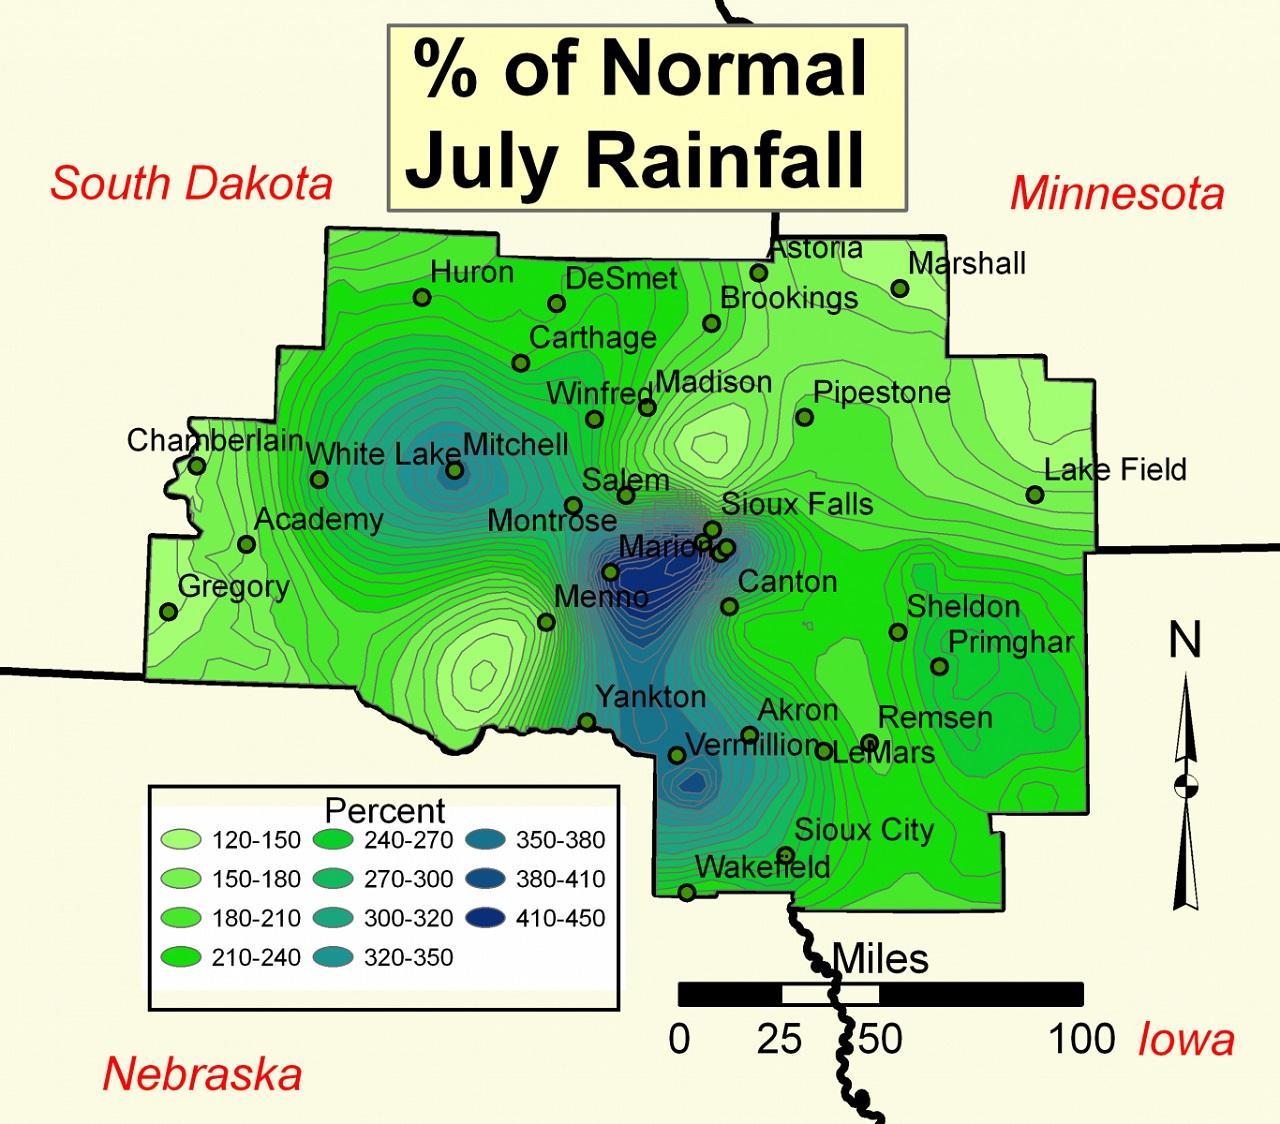 Percent of Normal July Rainfall